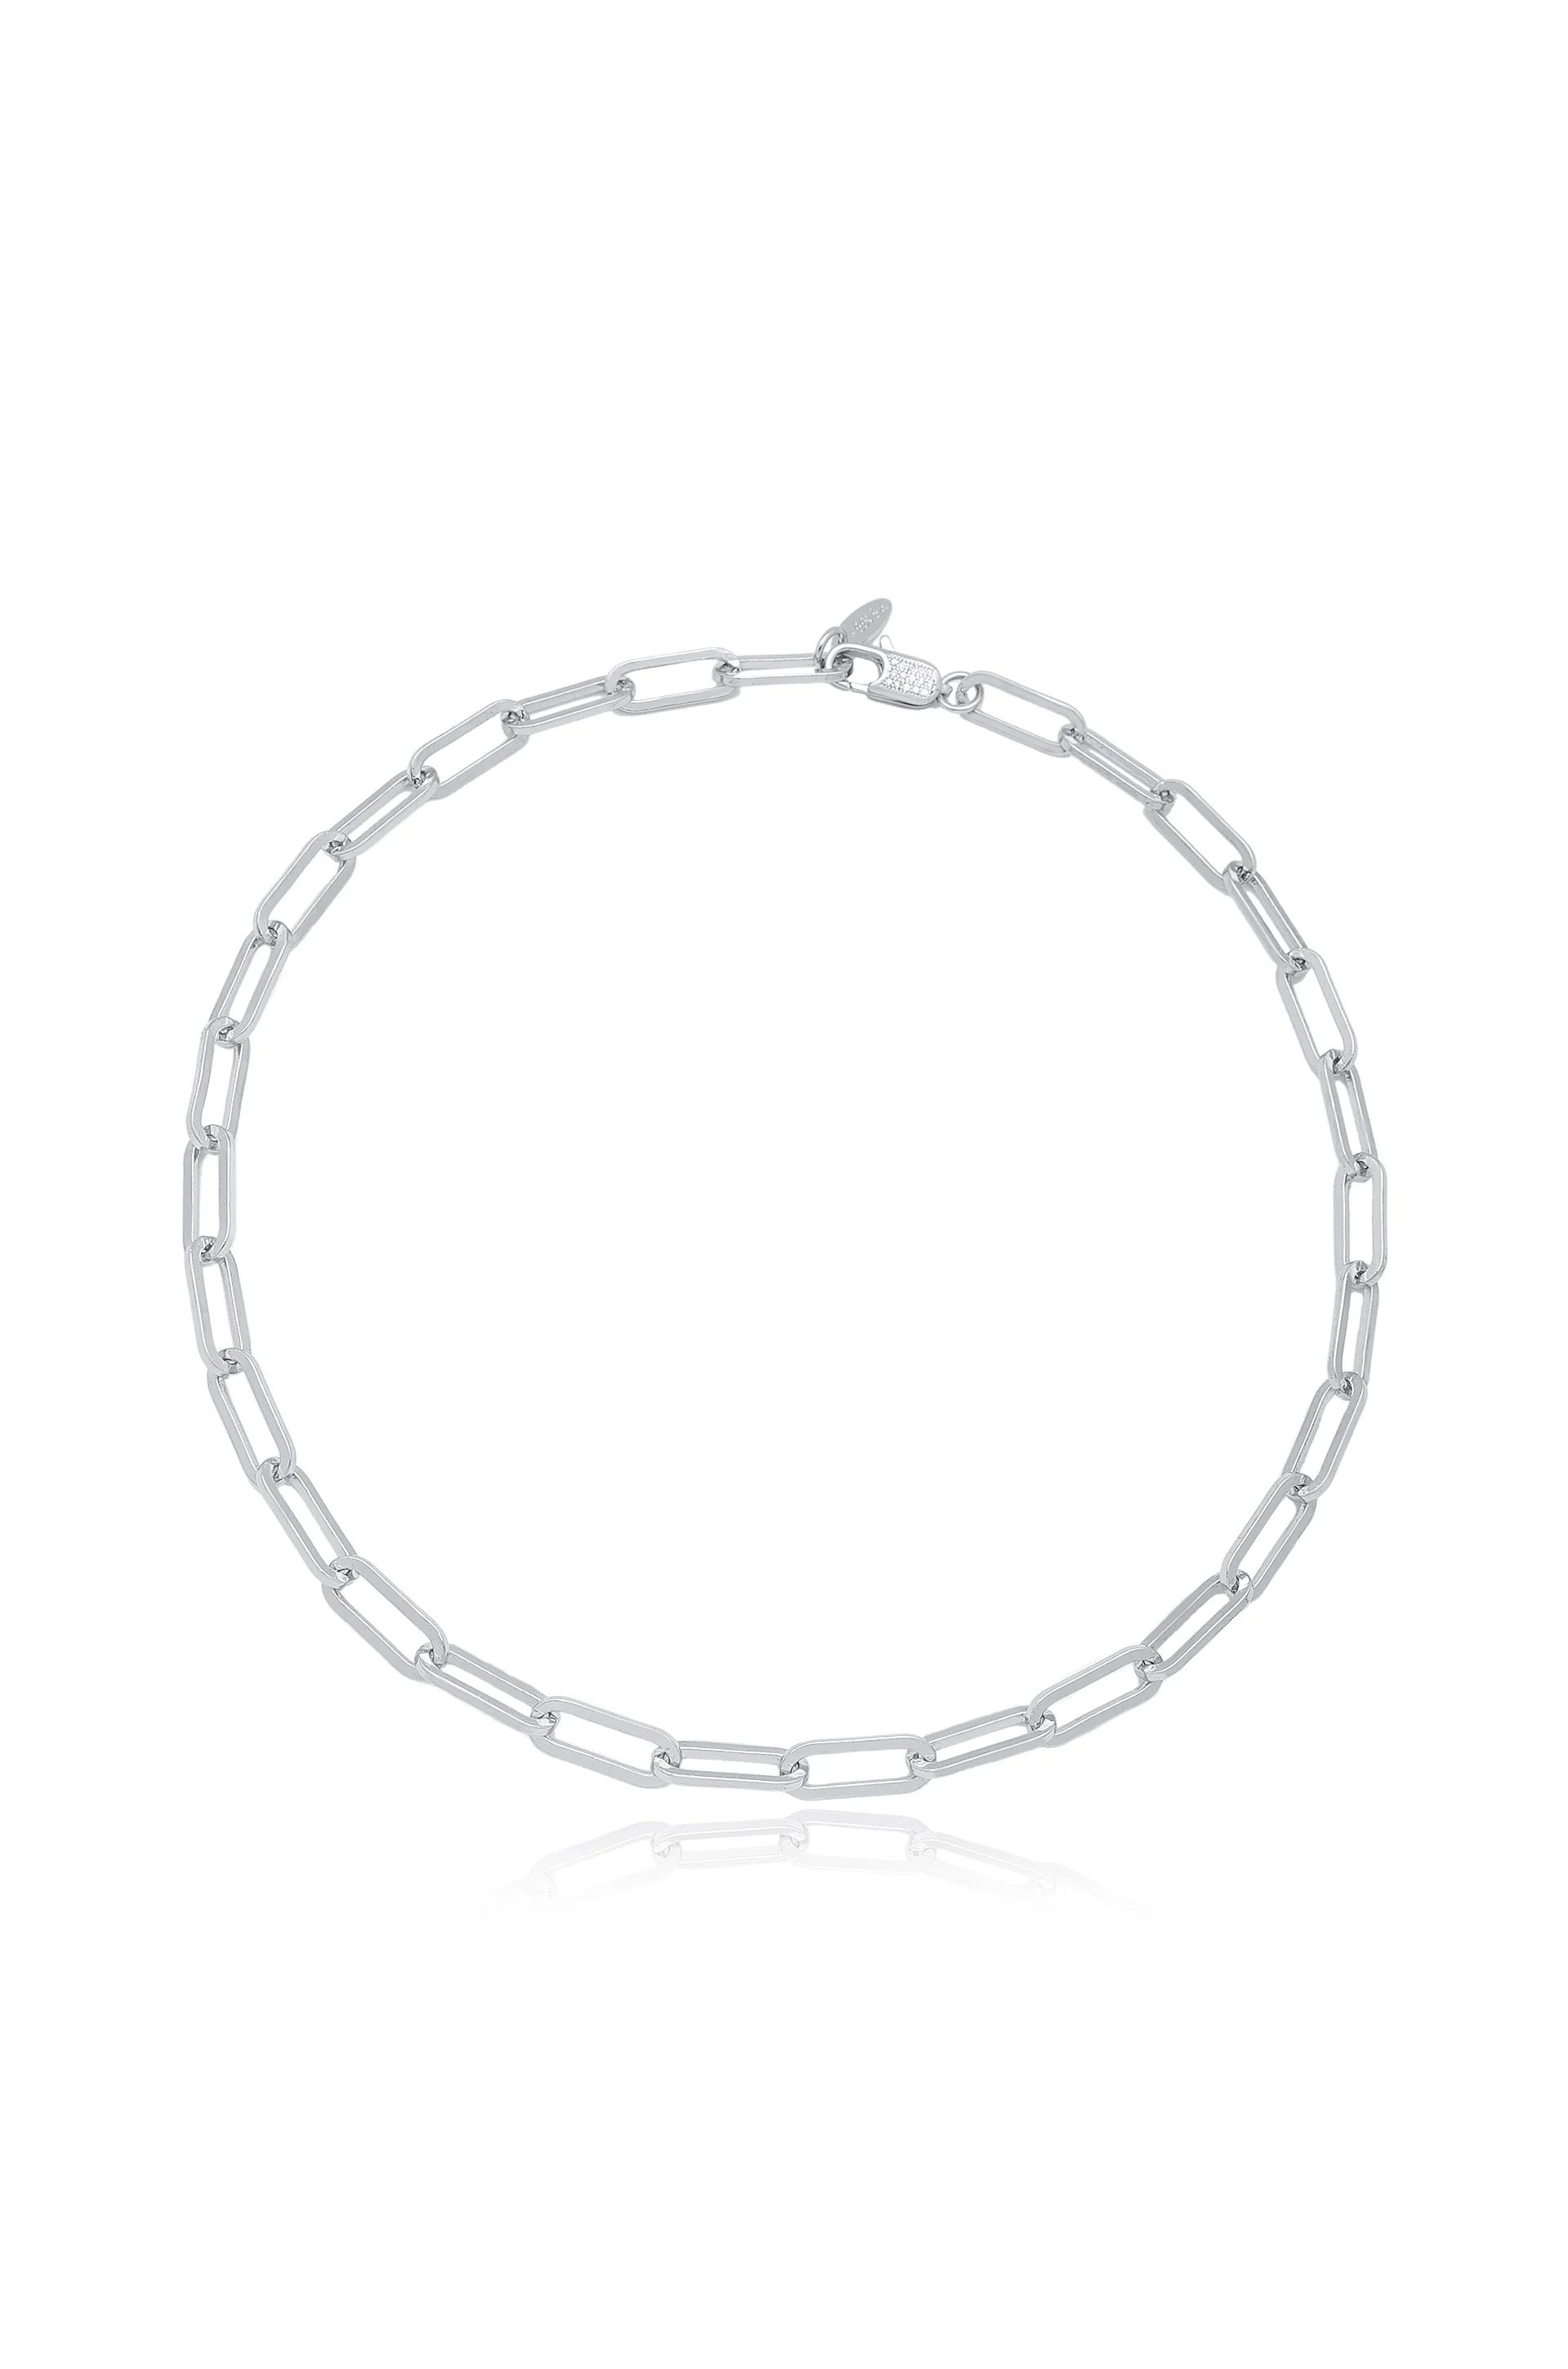 Interlinked Chain Necklace | Ettika